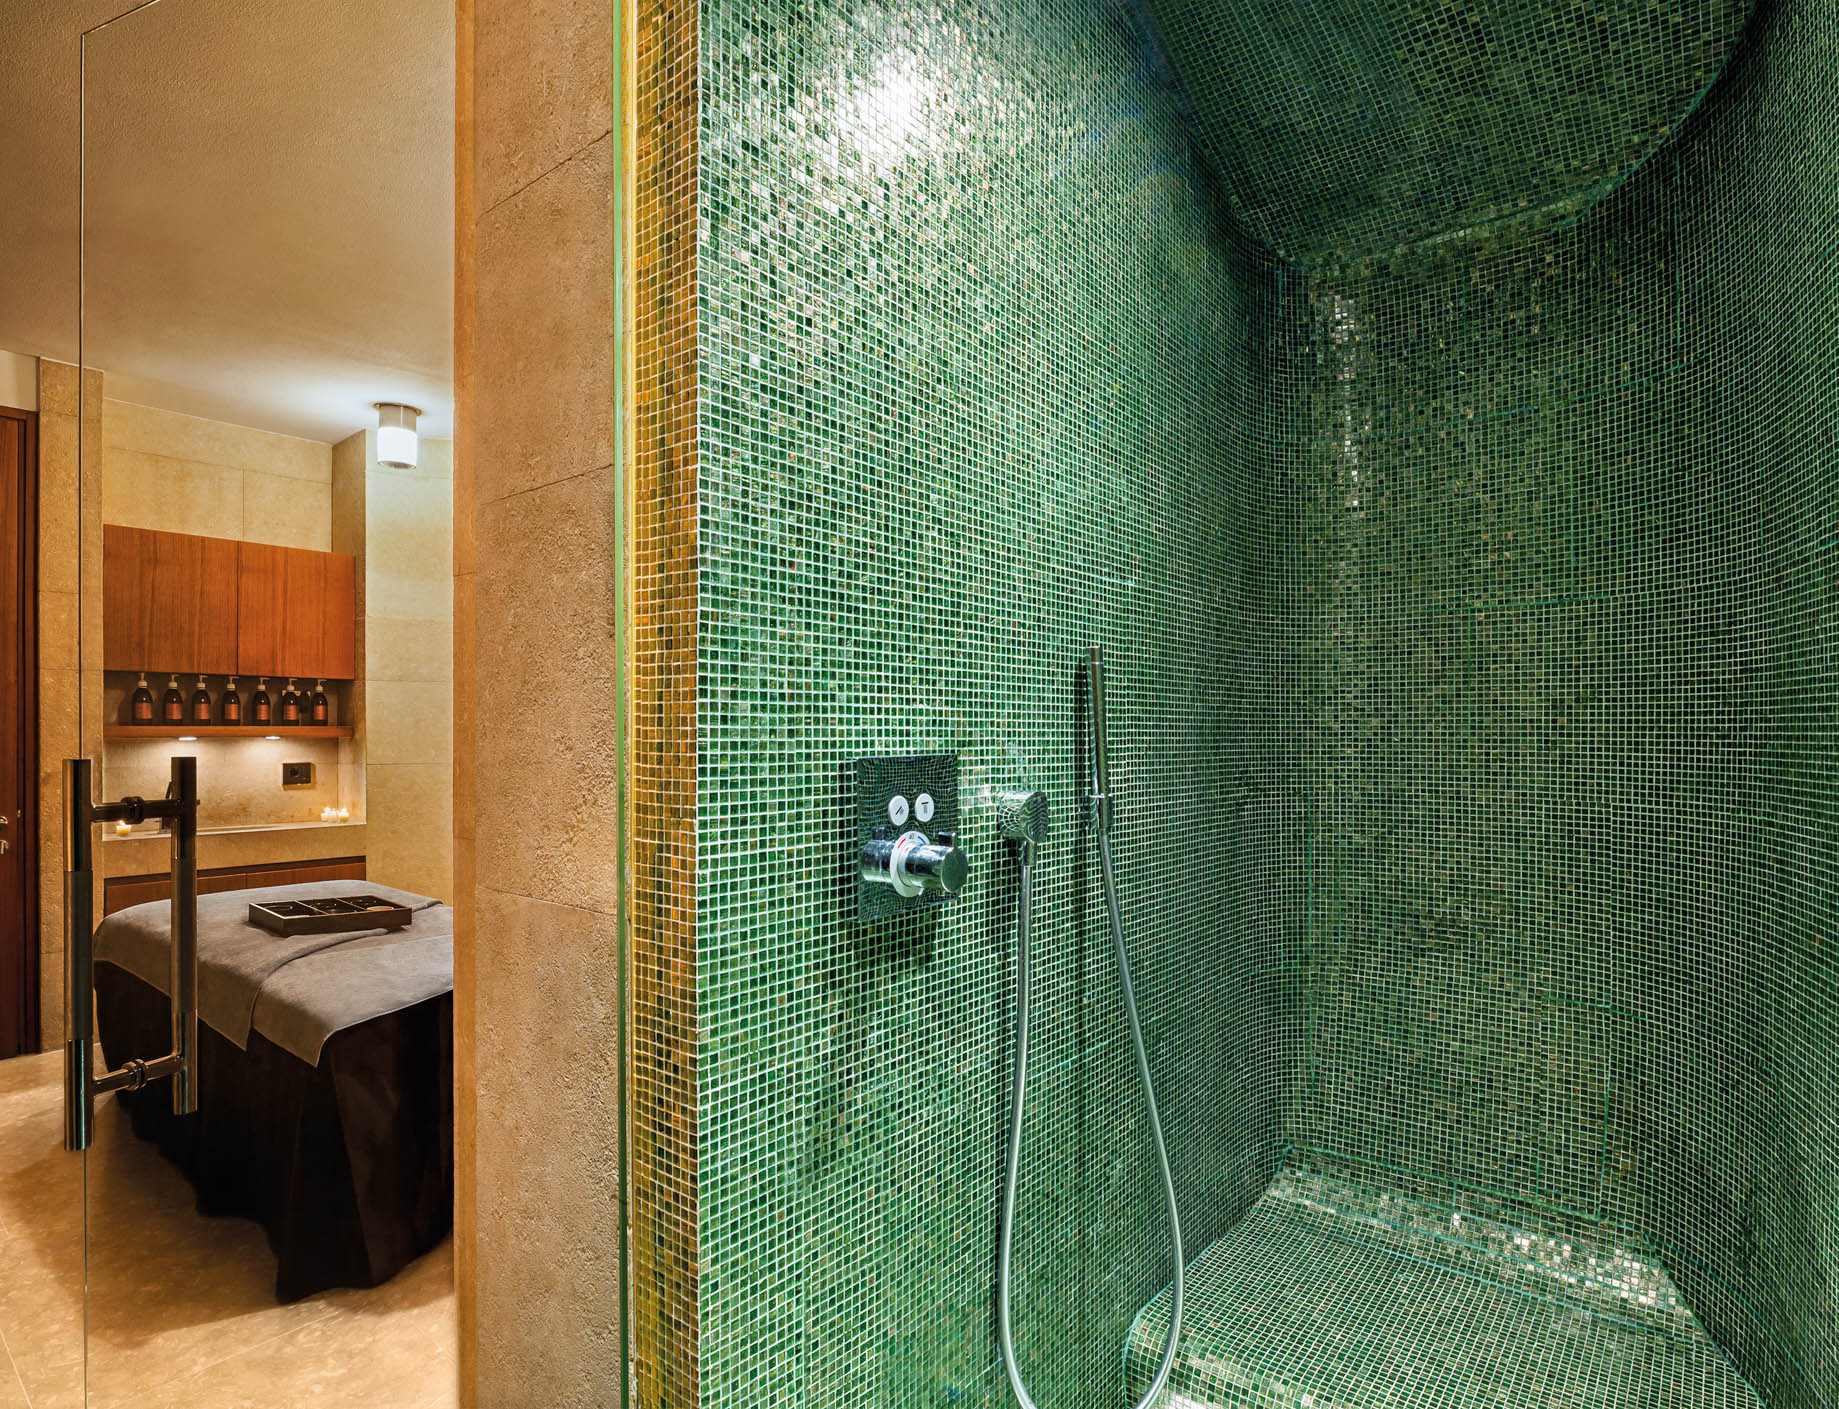 Bvlgari Hotel Milano - Milan, Italy - Bvlgari Spa Treatment Room